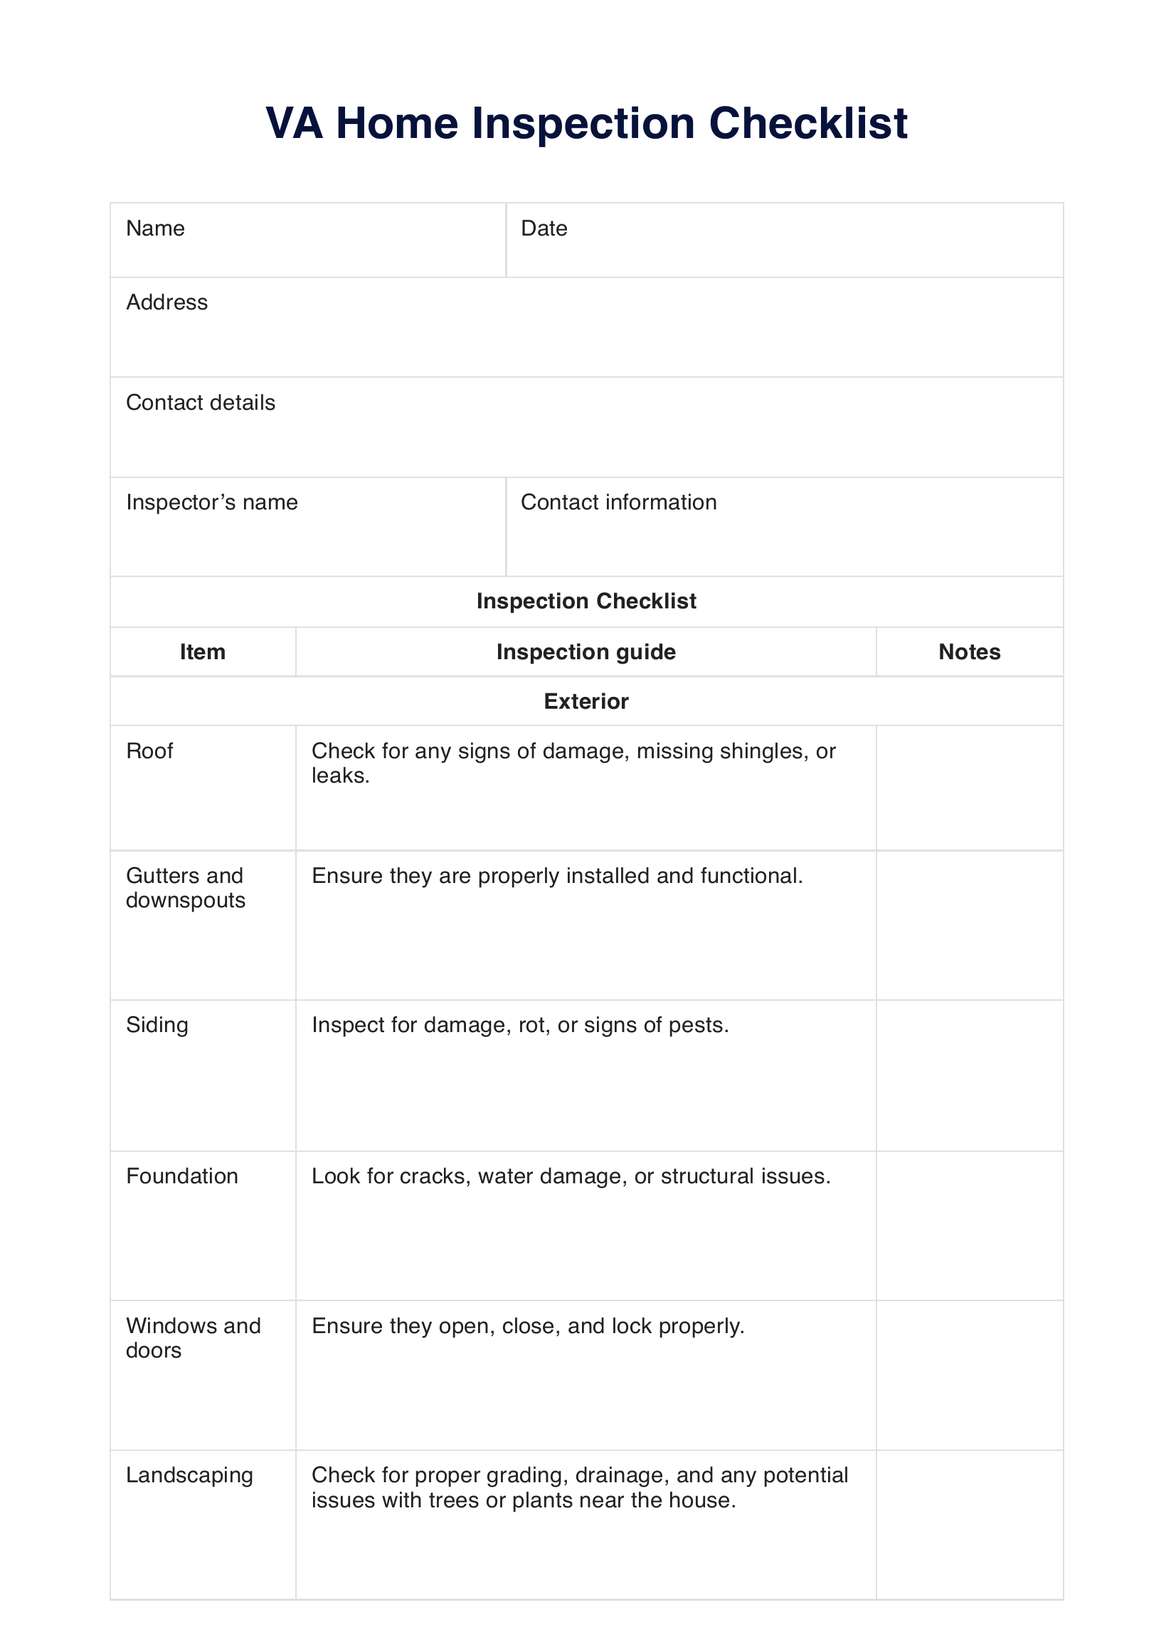 VA Home Inspection Checklist PDF Example